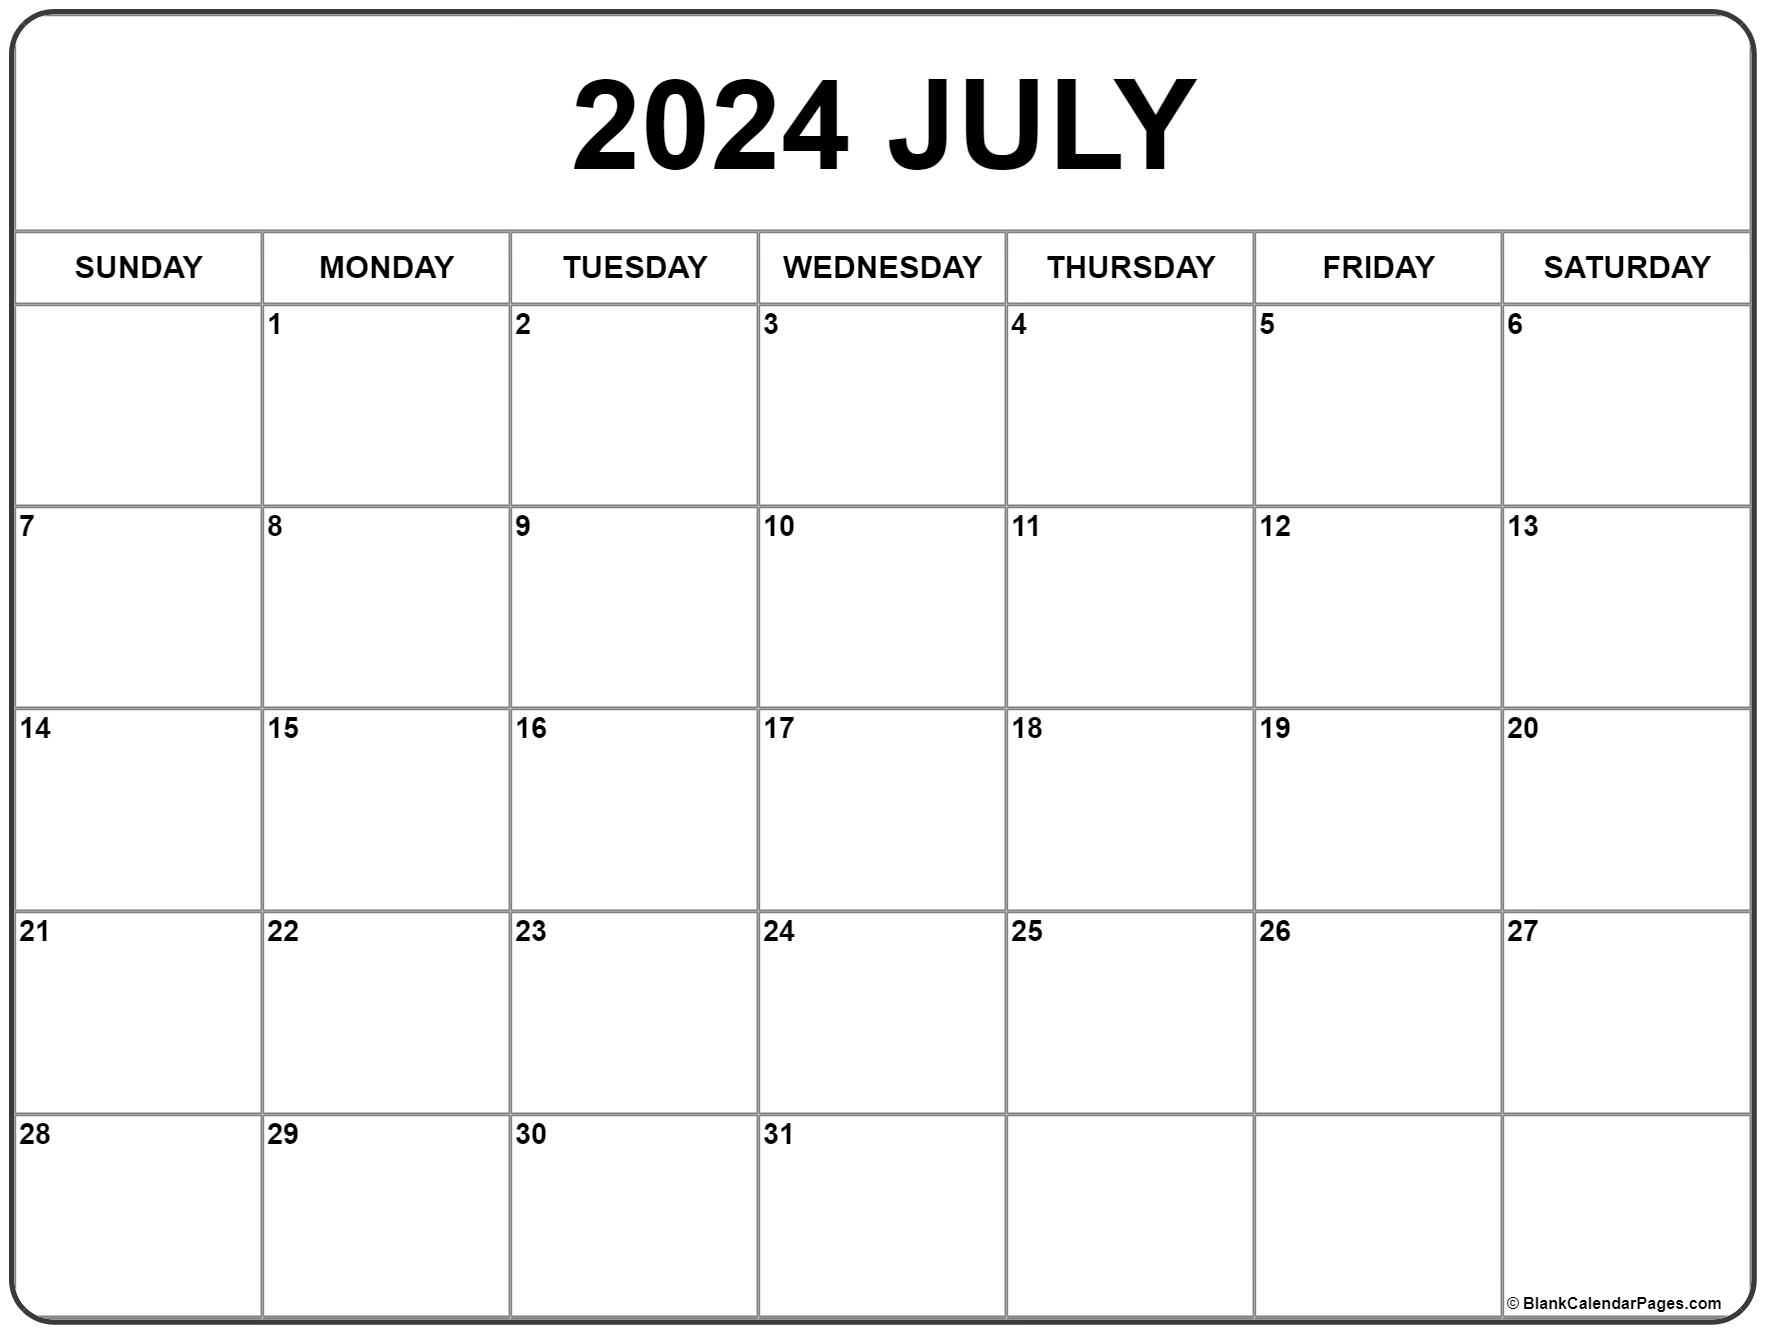 July 2024 Calendar | Free Printable Calendar | Open My Calendar For July 2024